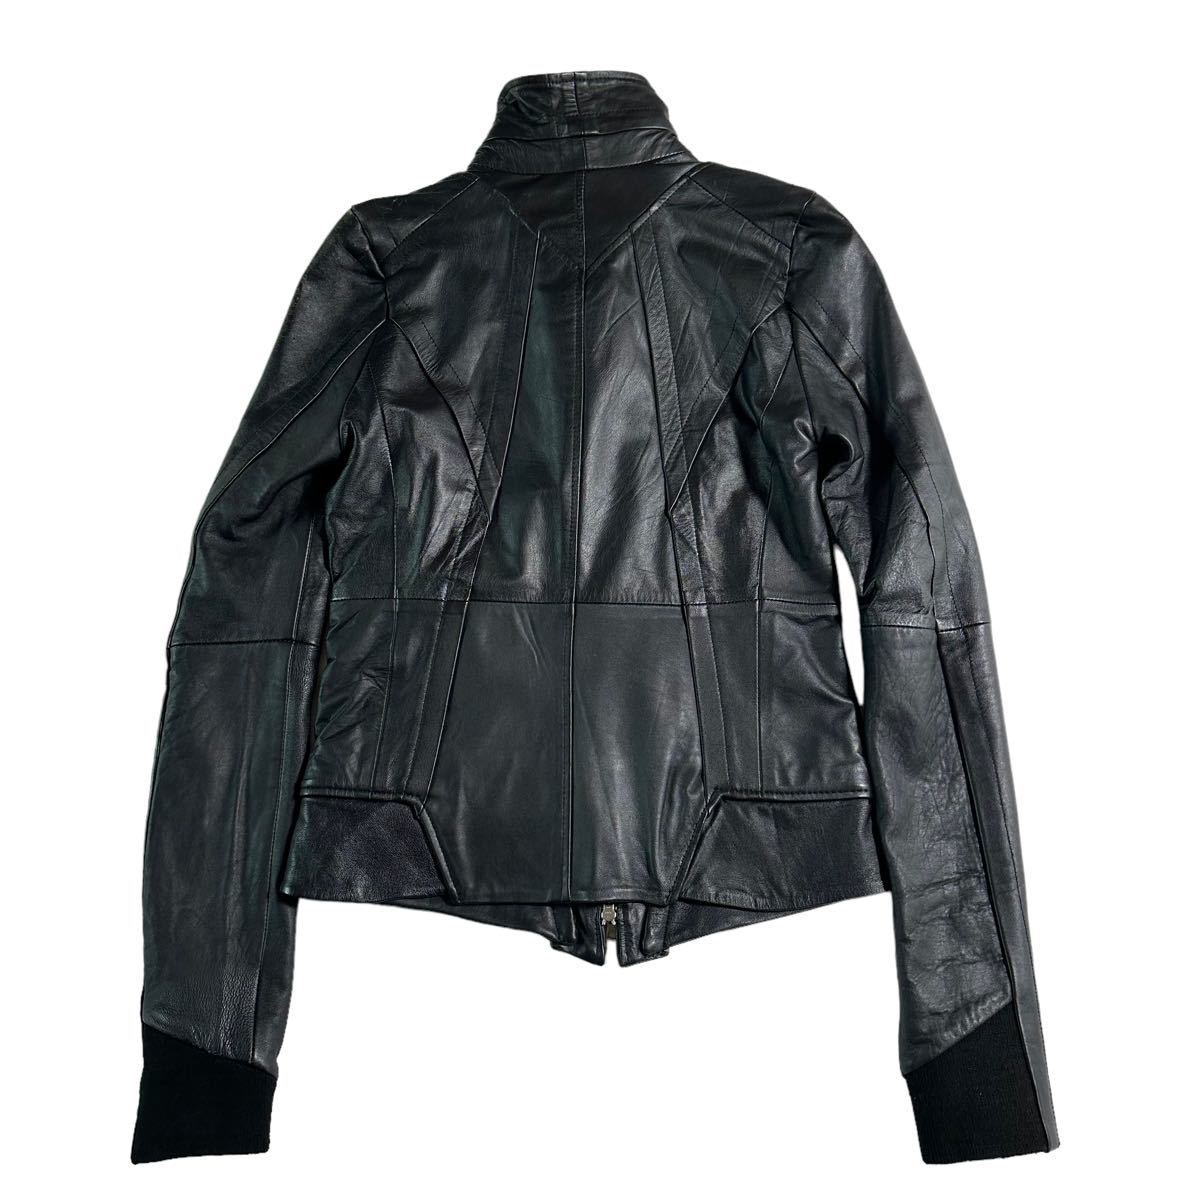 00s rare japanese label EKAM design leather riders jacket Archive jacket riders lgb ifsixwasnine share spirit 90s vintage goa_画像4